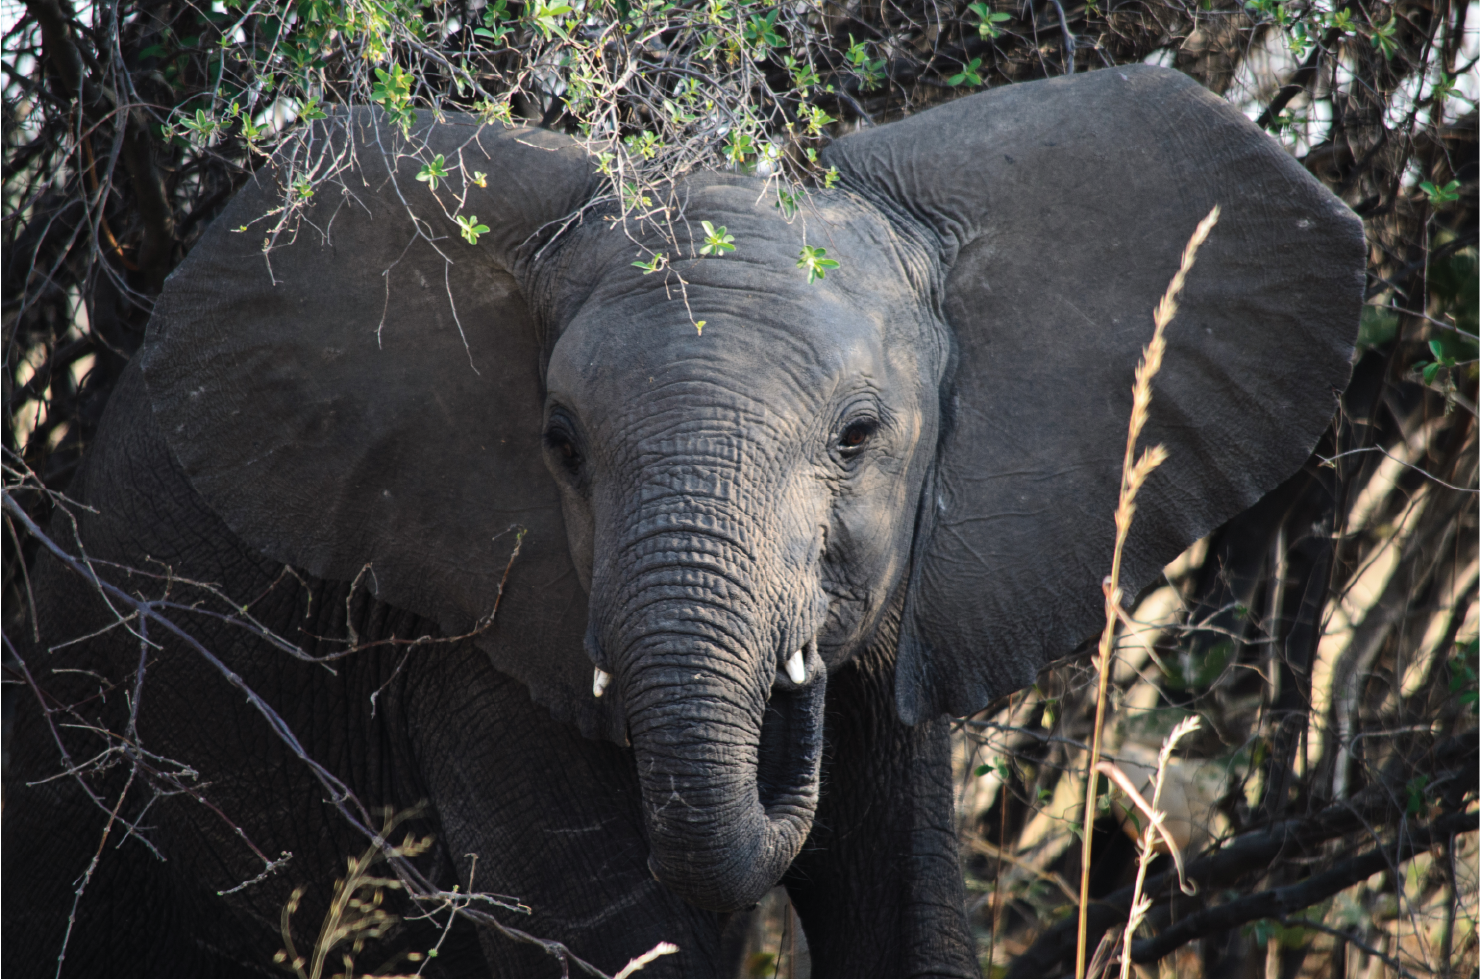 Refuge: Elephant Sanctuaries Around the World